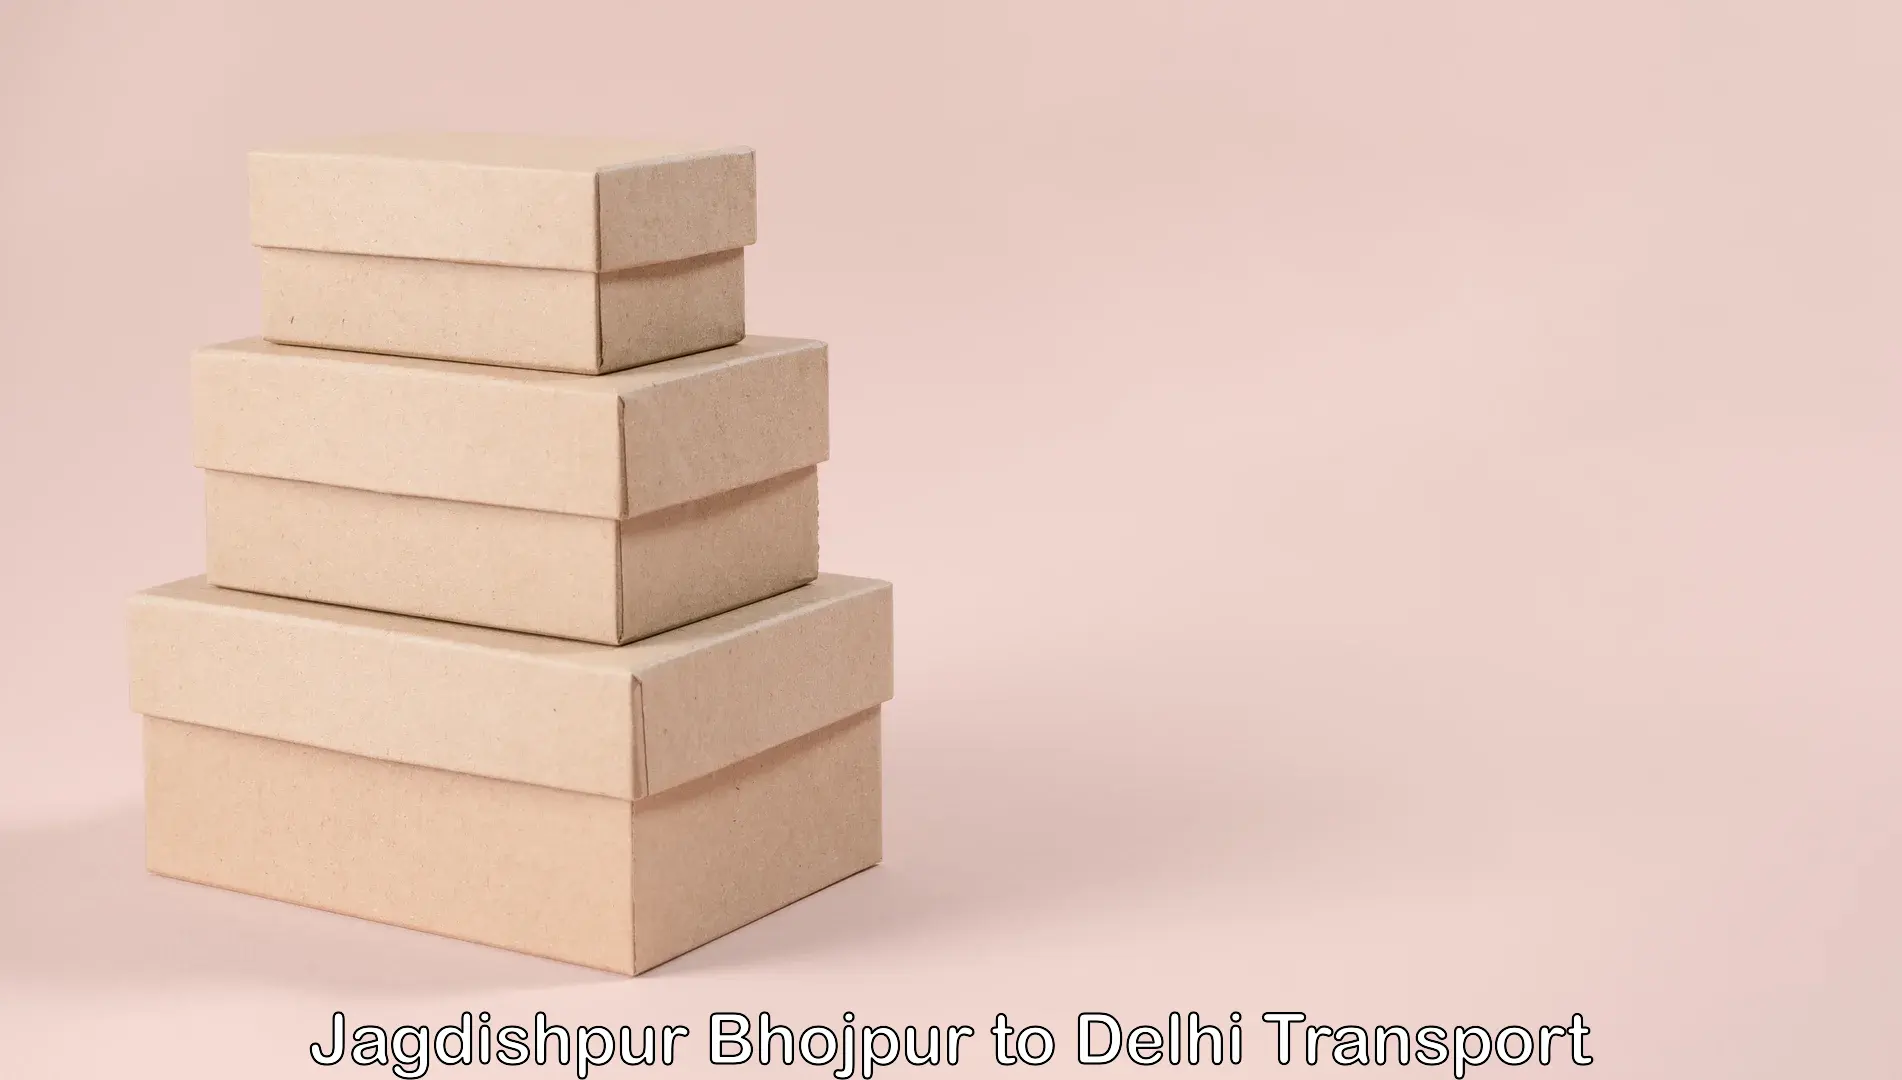 Truck transport companies in India Jagdishpur Bhojpur to Delhi